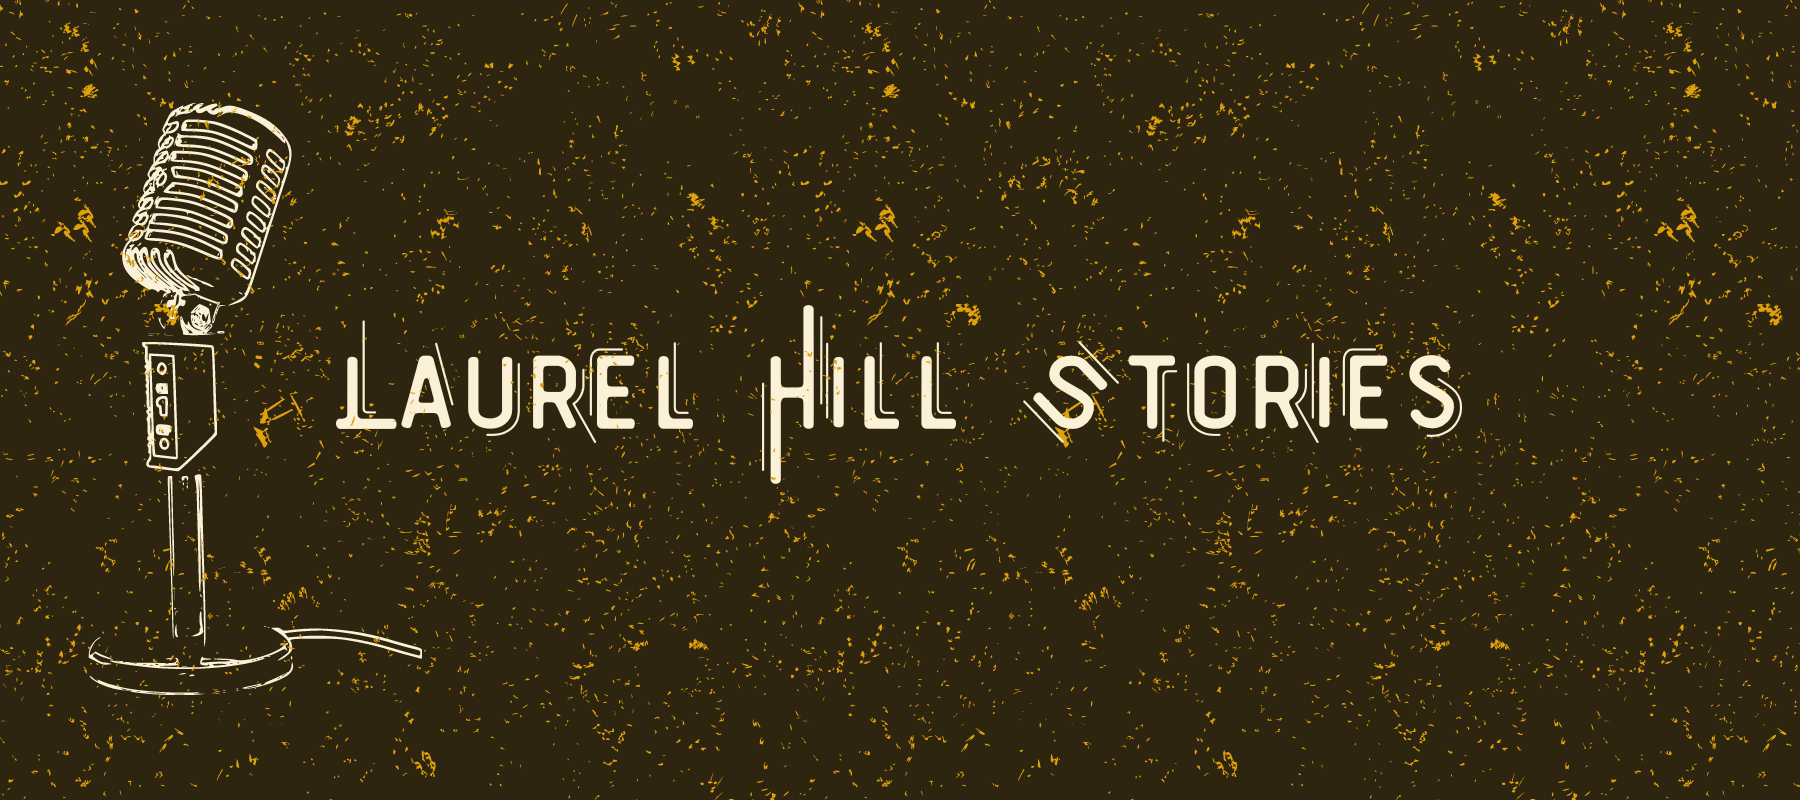 All Bones Considered: Laurel Hill Stories